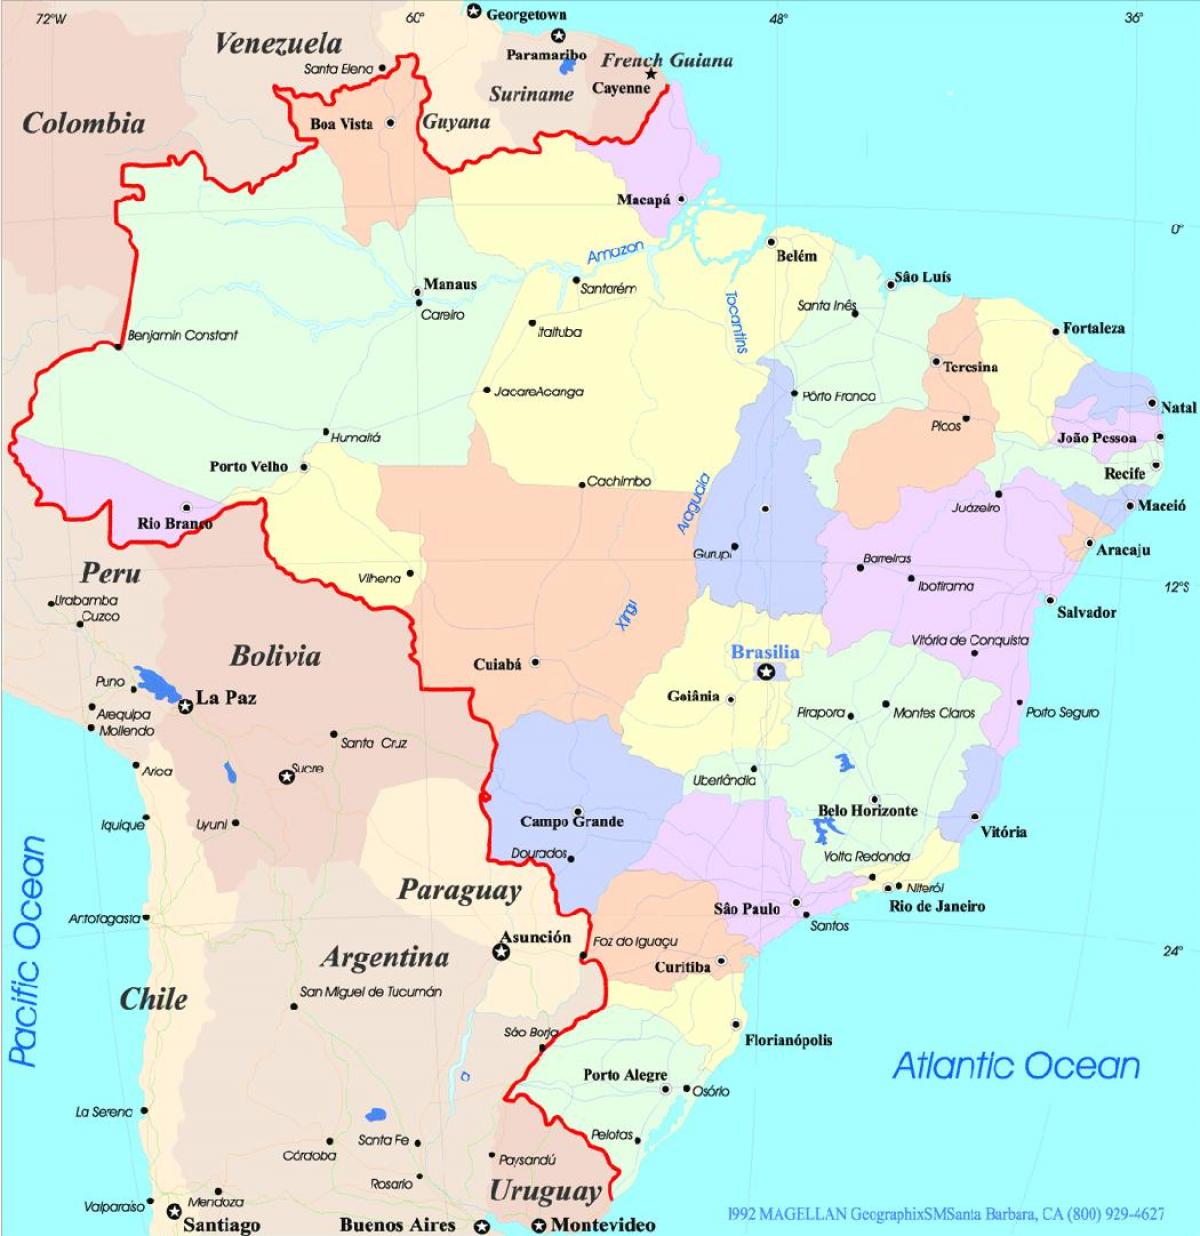 Mappa amministrativa del Brasile